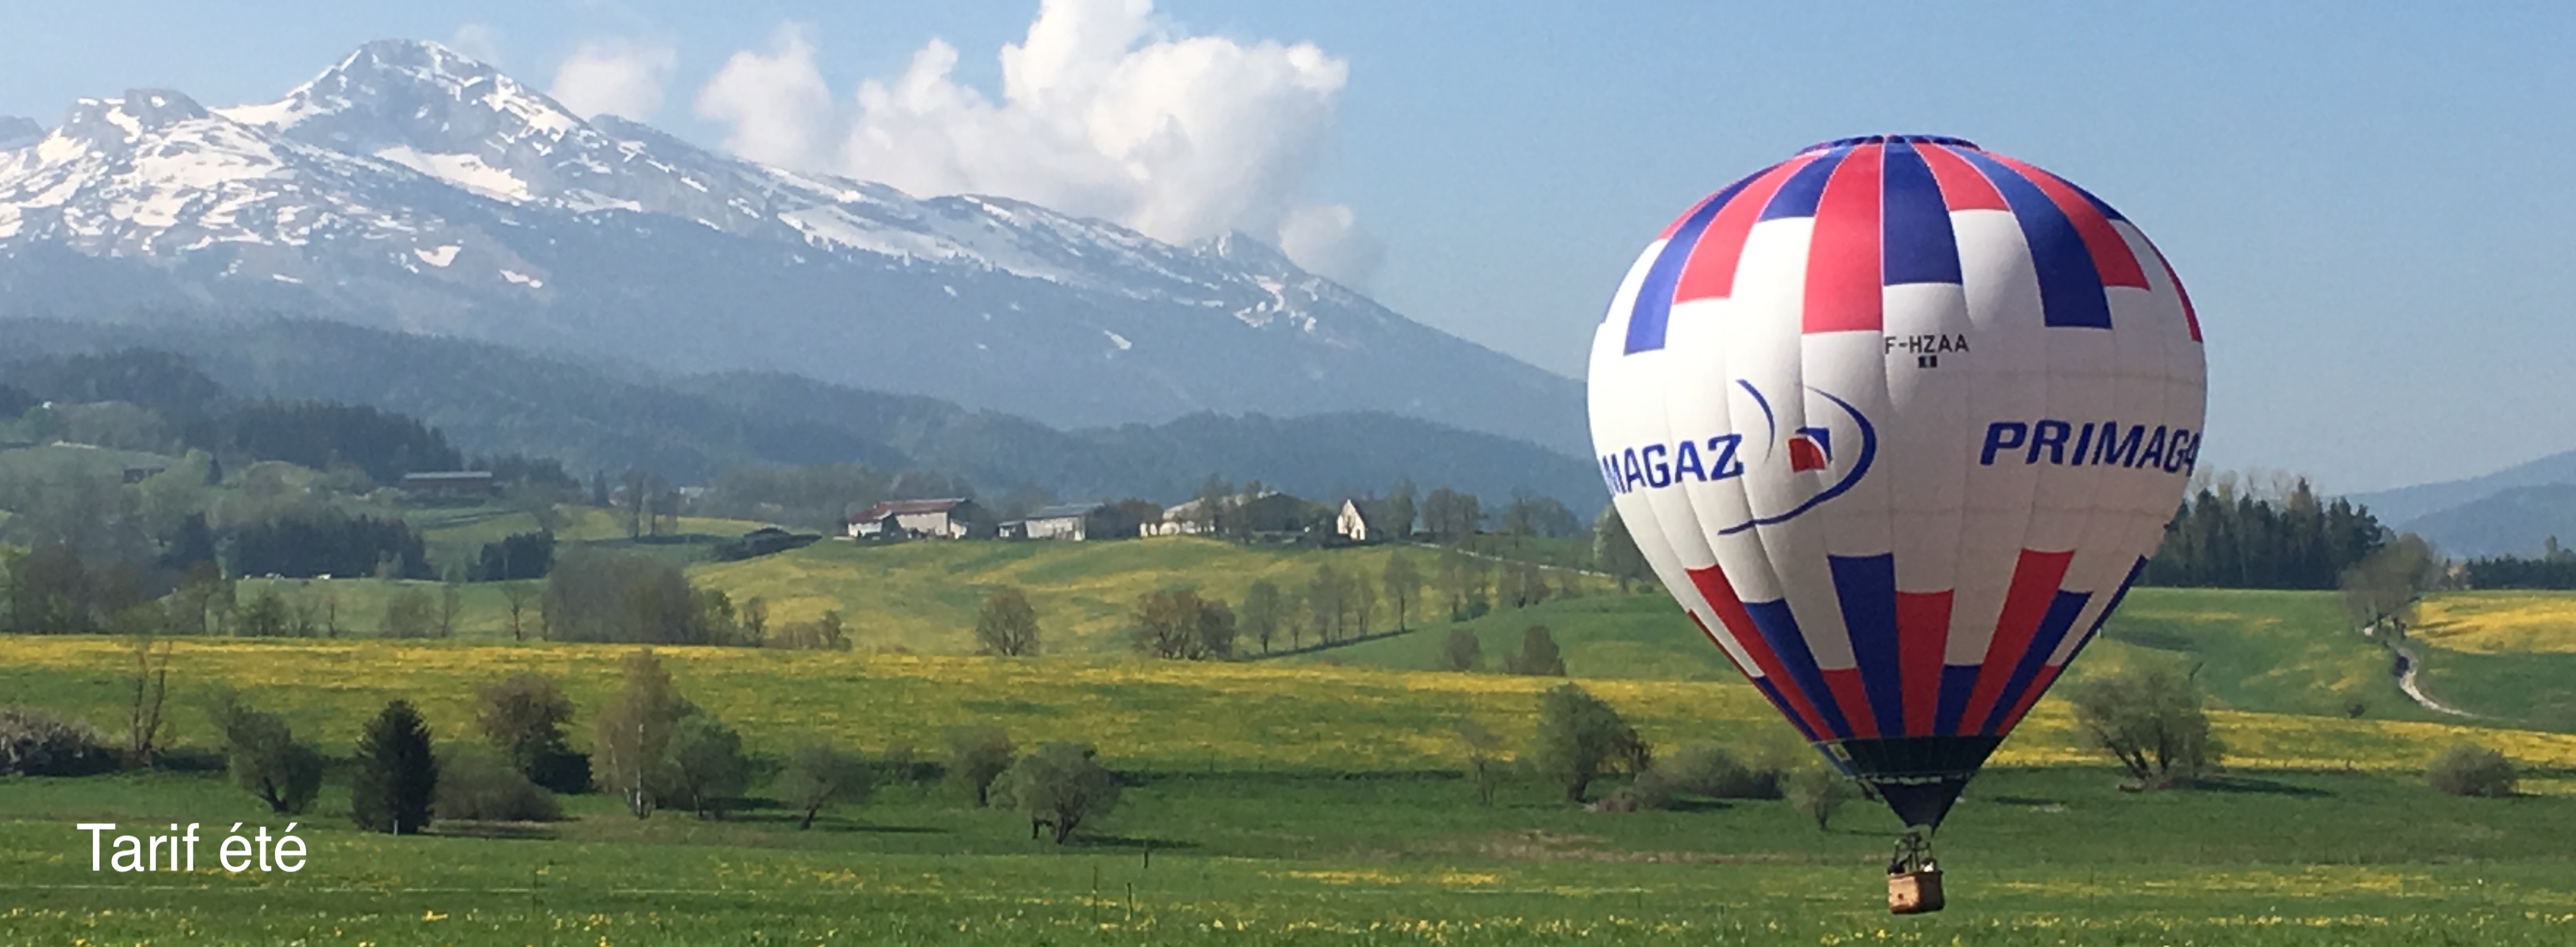 Heissluftballon in dem Val de Lans